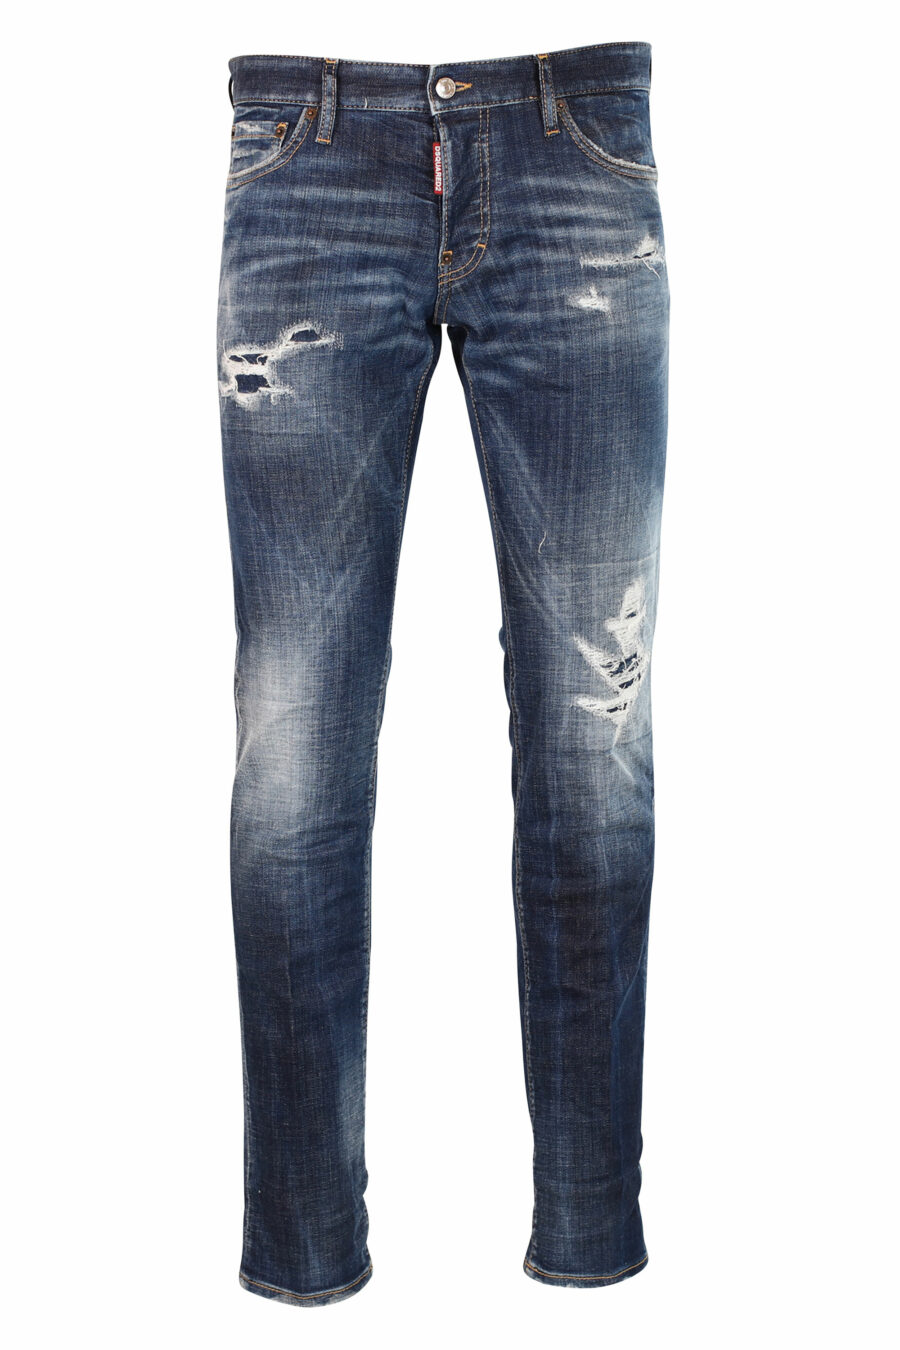 Pantalón vaquero "Slim jean" azul semi desgastado con rotos - Photos 8052134942789